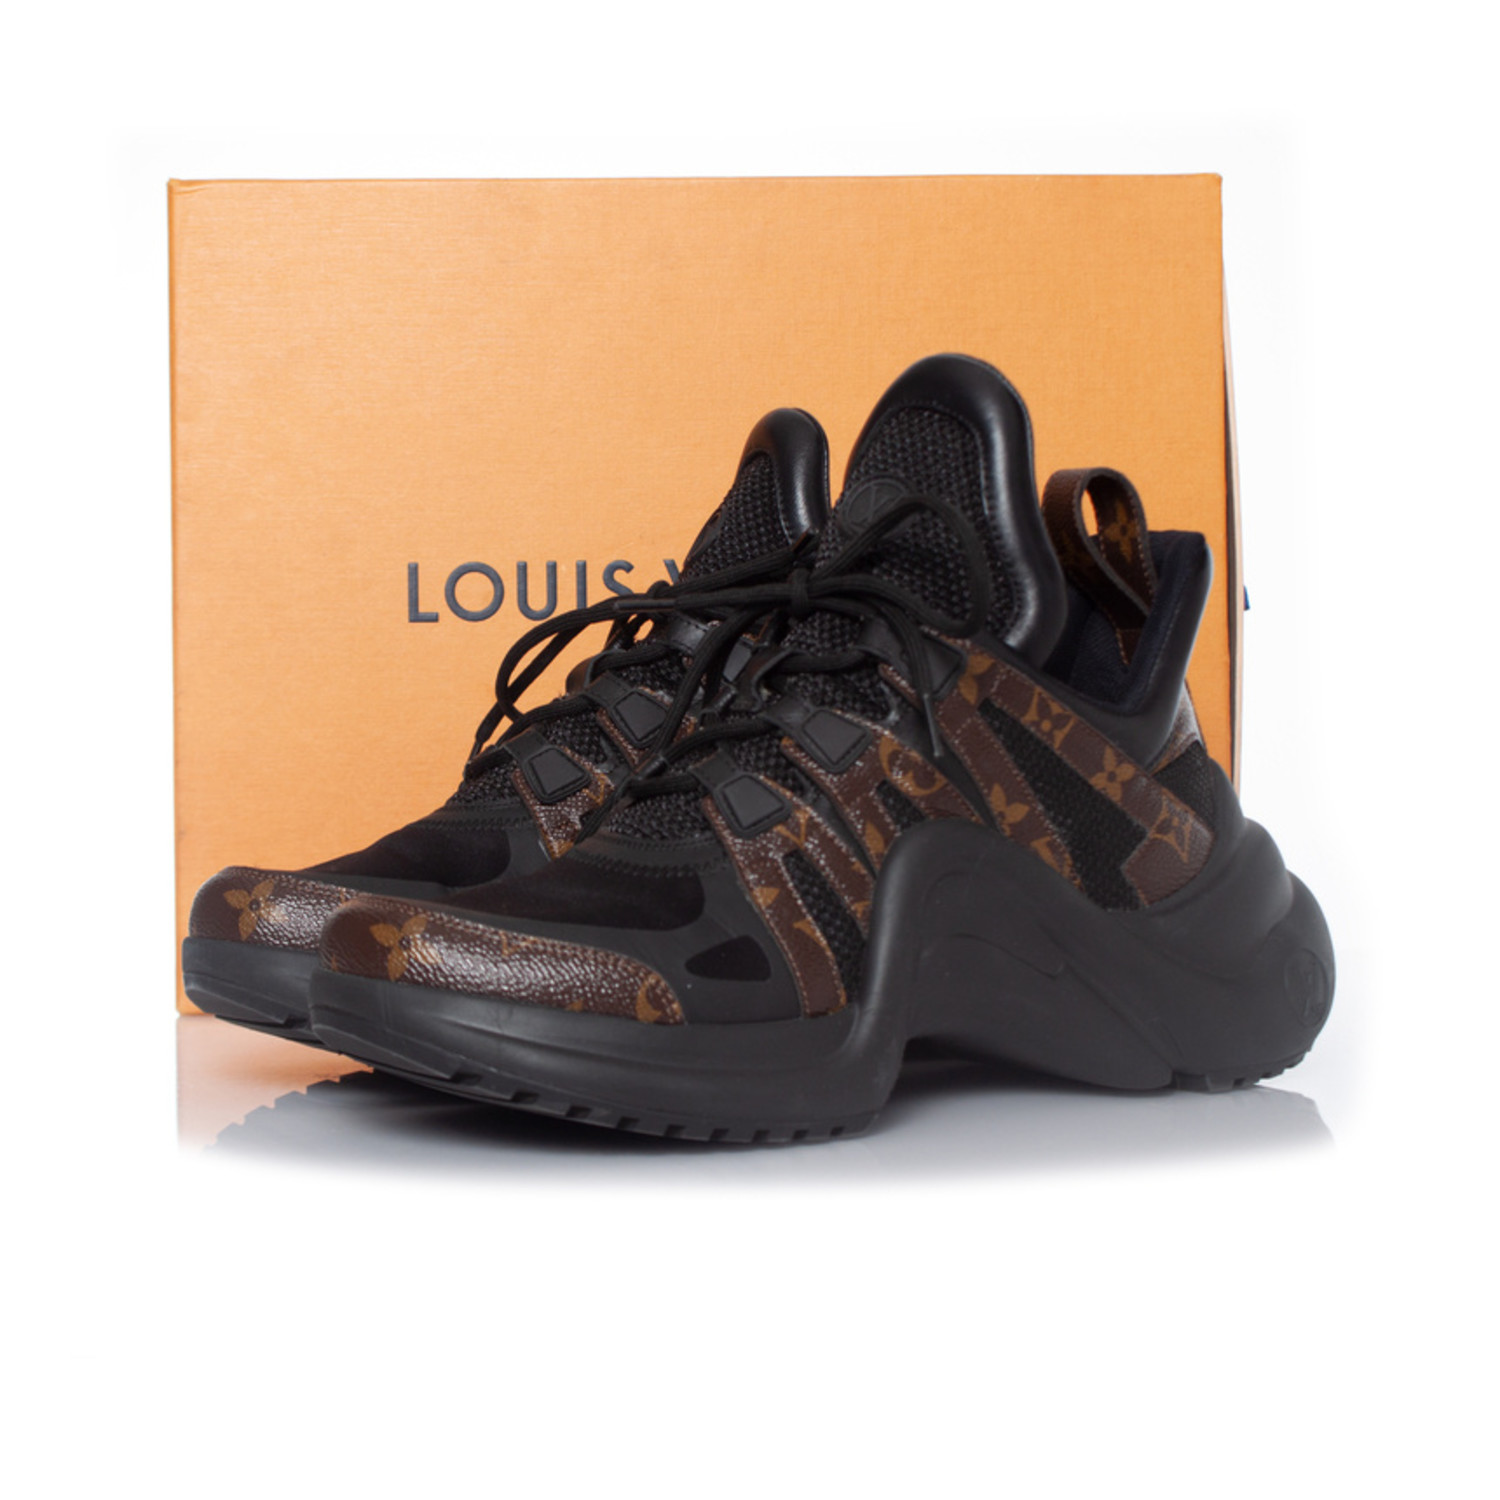 Louis Vuitton - LV Archlight 2.0 Men's Platform Sneakers Trainers - Brown - Women - Size: 08 - Luxury